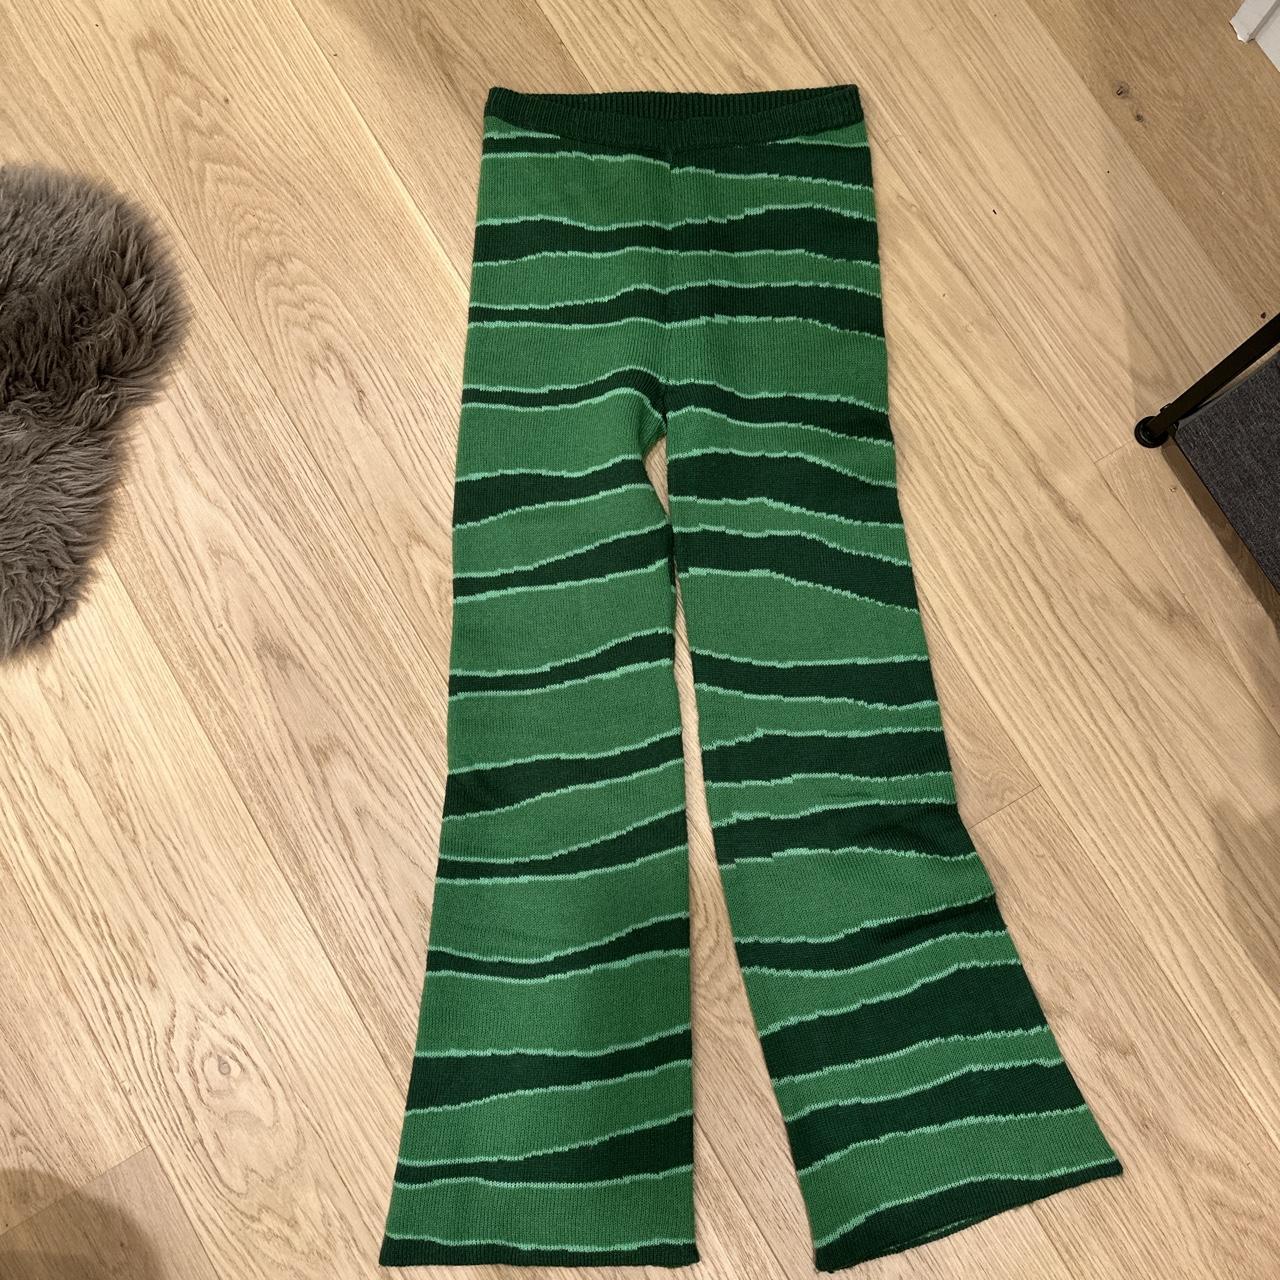 Arthur apparel knit green pants size 4 - Depop